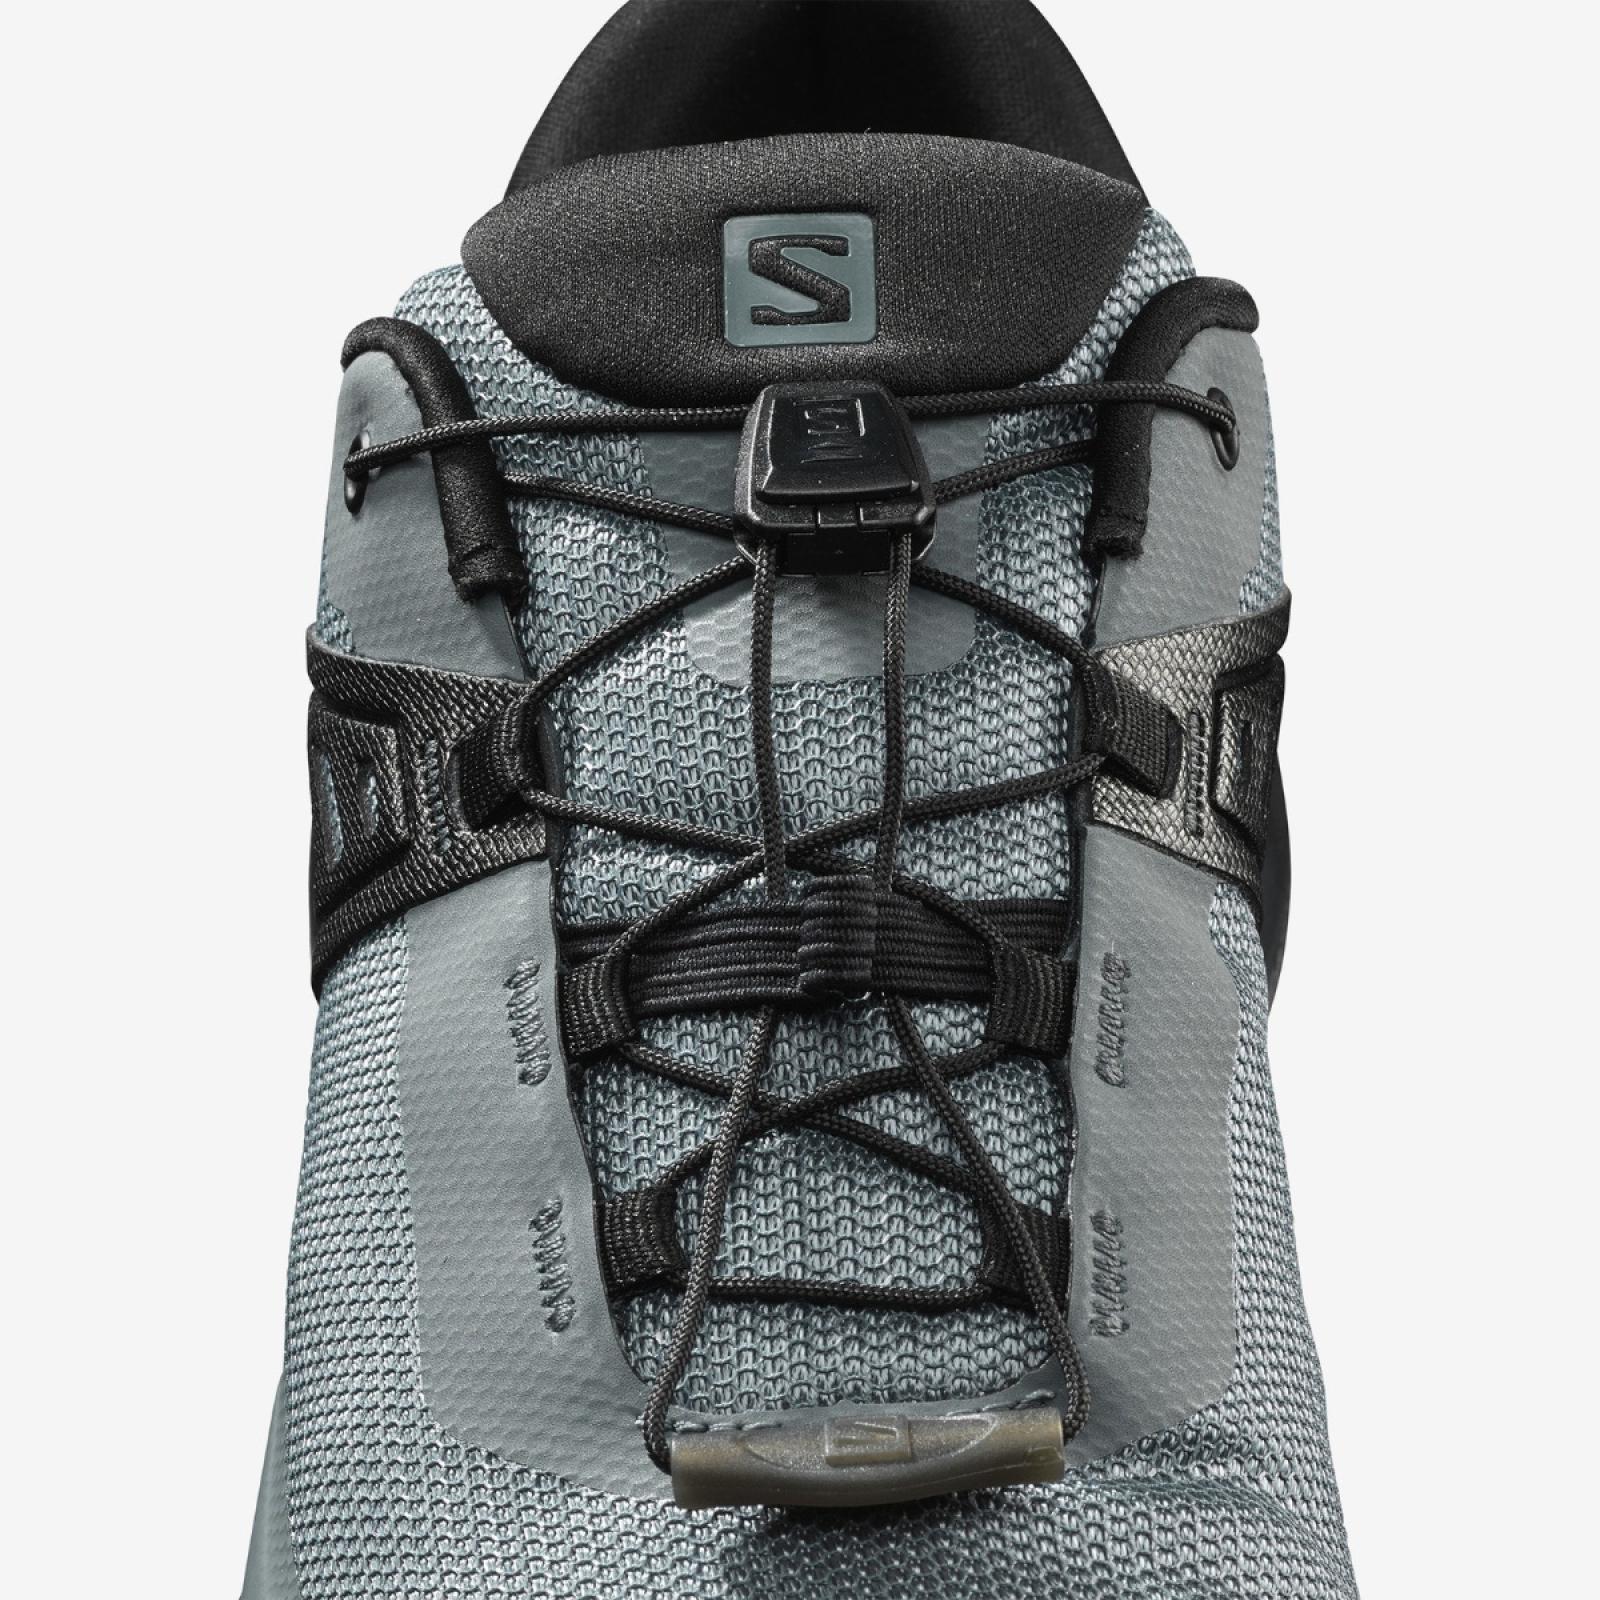 Salomon Women's X Raise Hiking Shoes